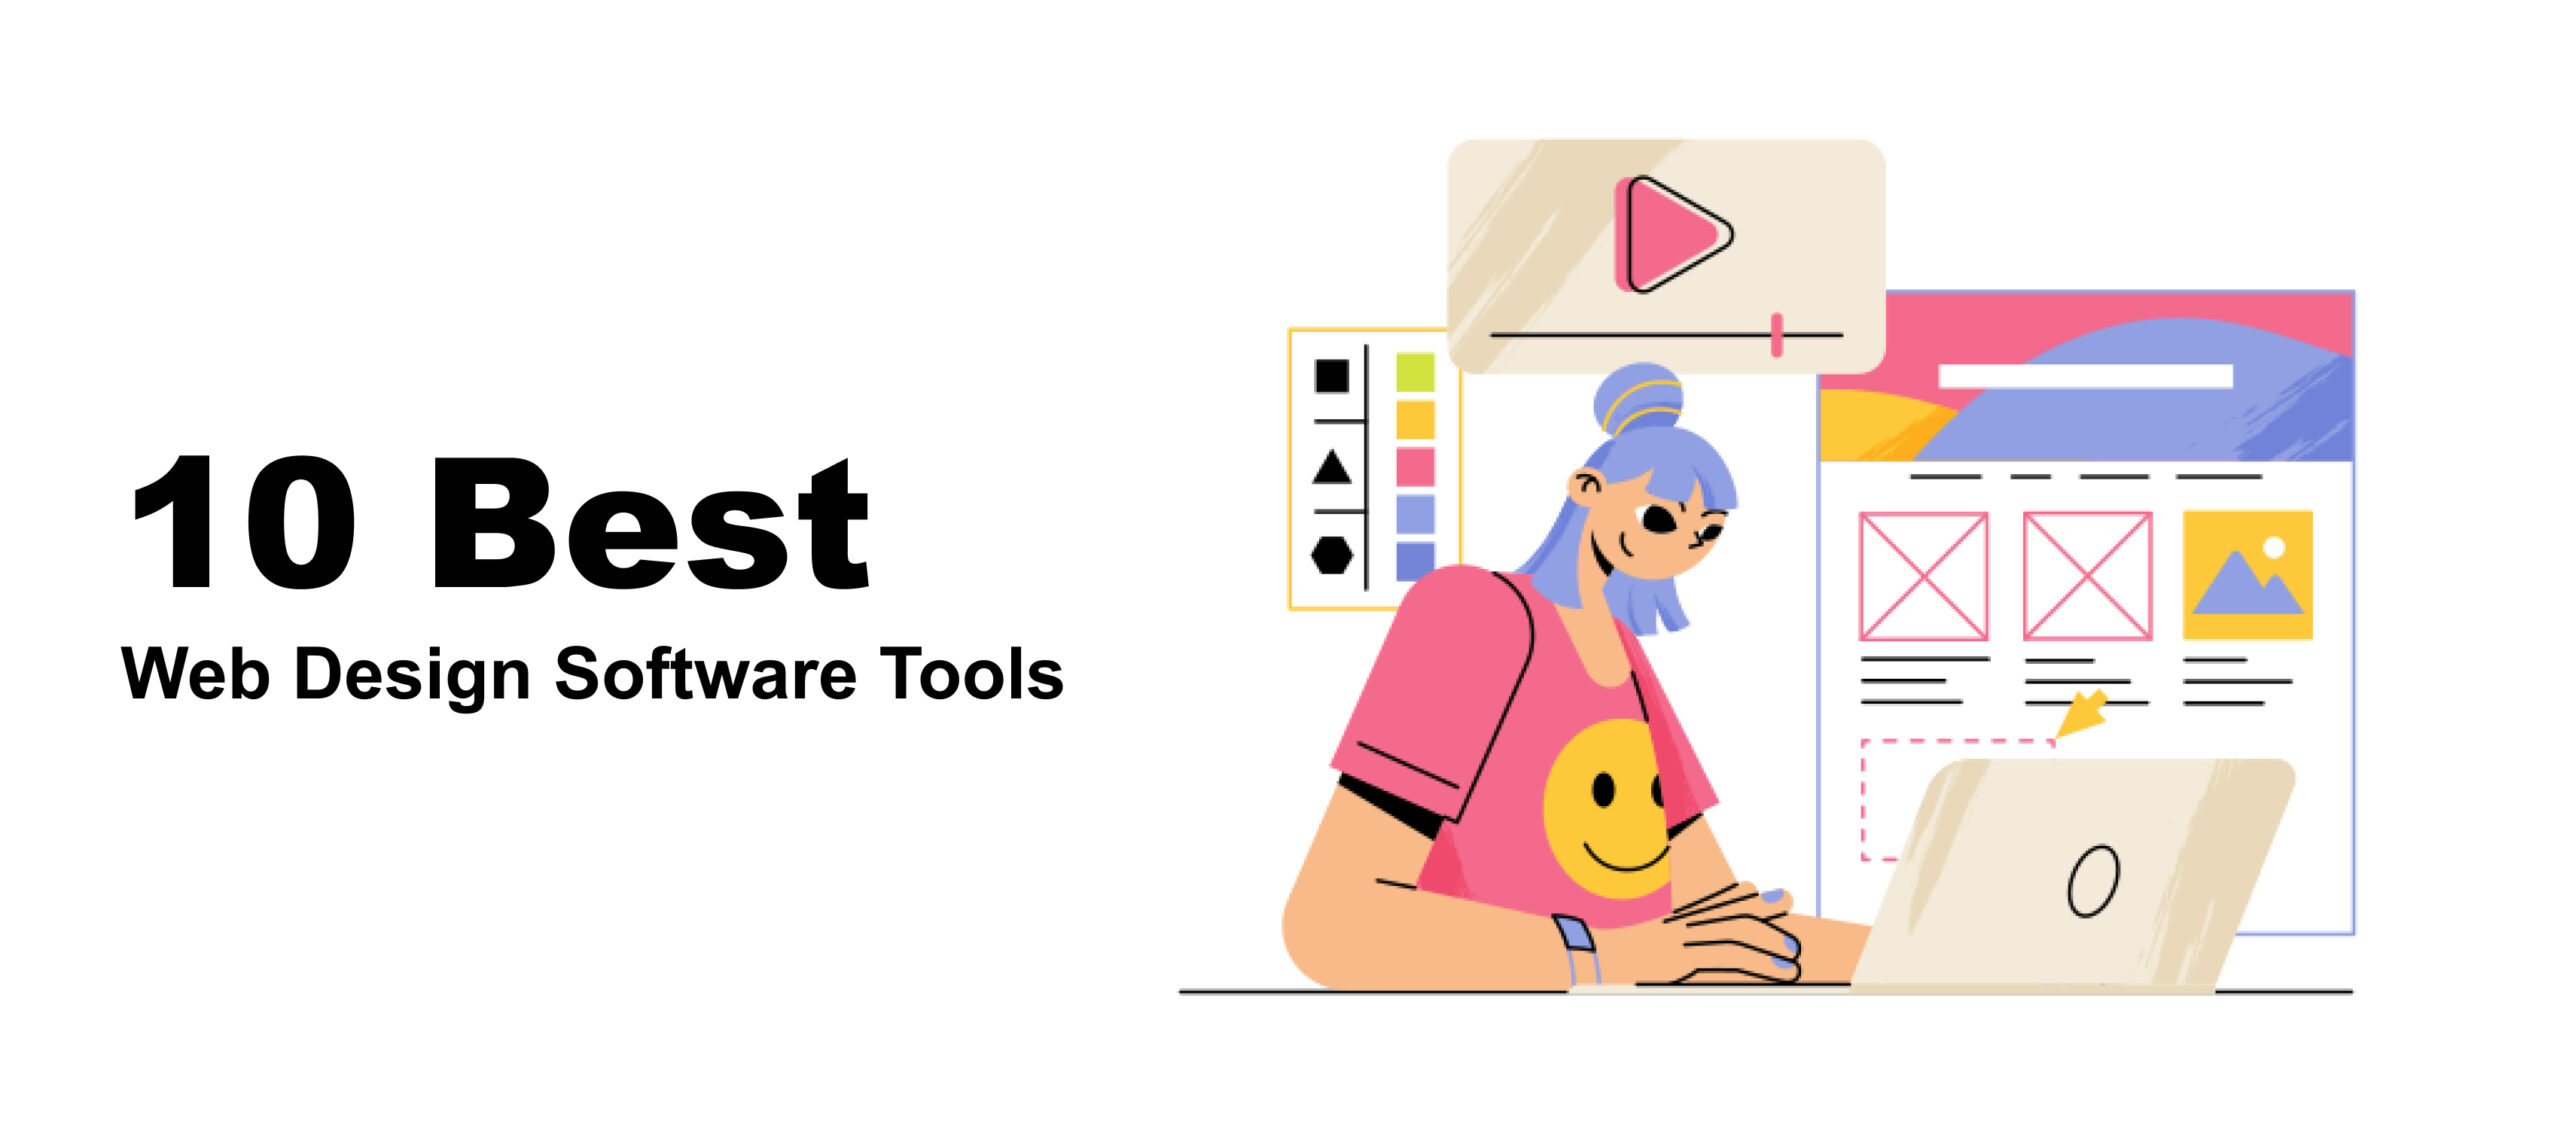  10 Best Web Design Software Tools